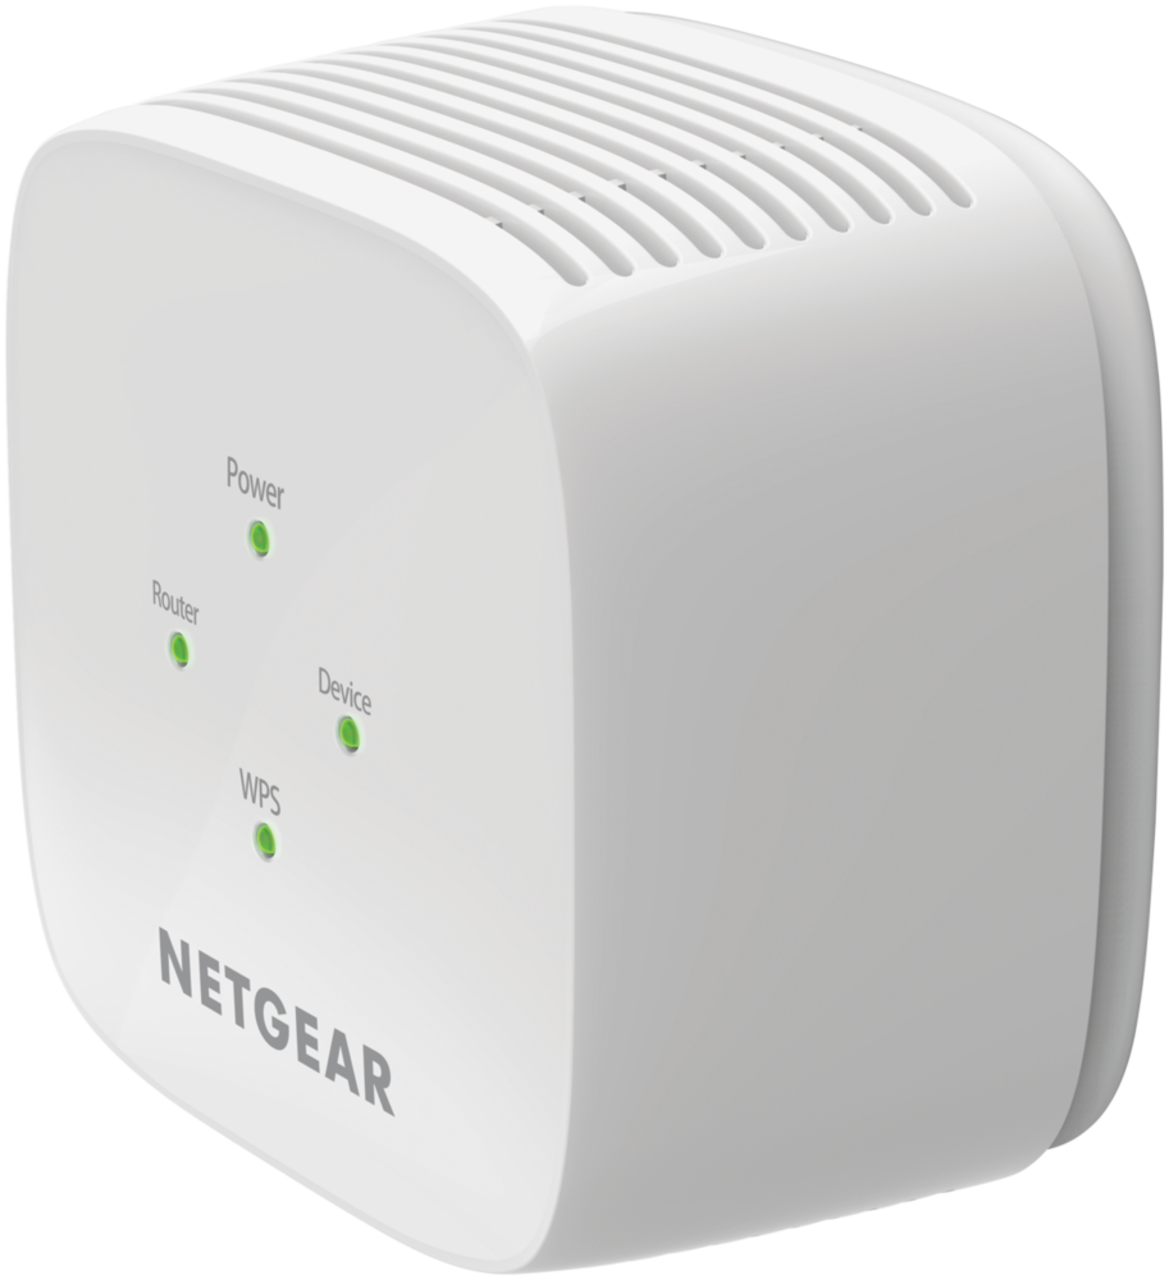 Netgear AC750 Wi-Fi Range Extender, White